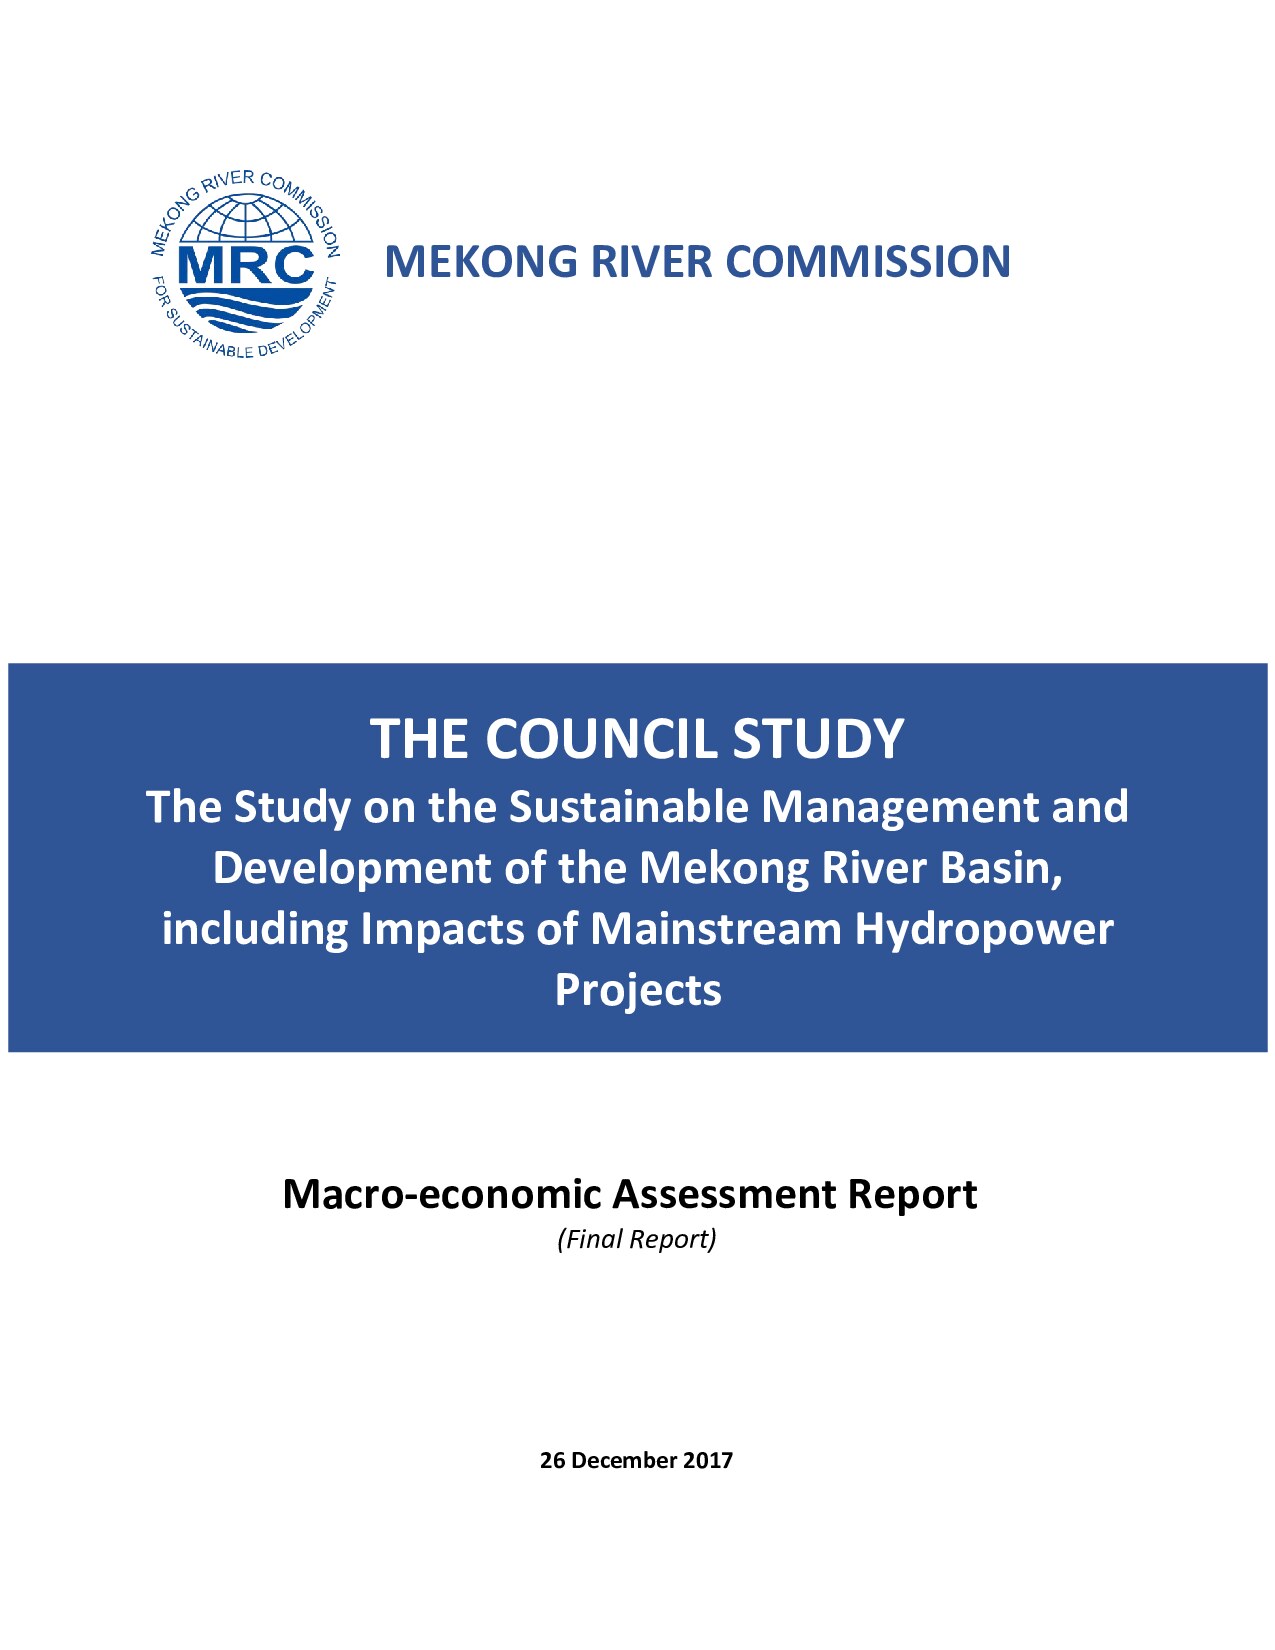 Macro-economic Assessment Report